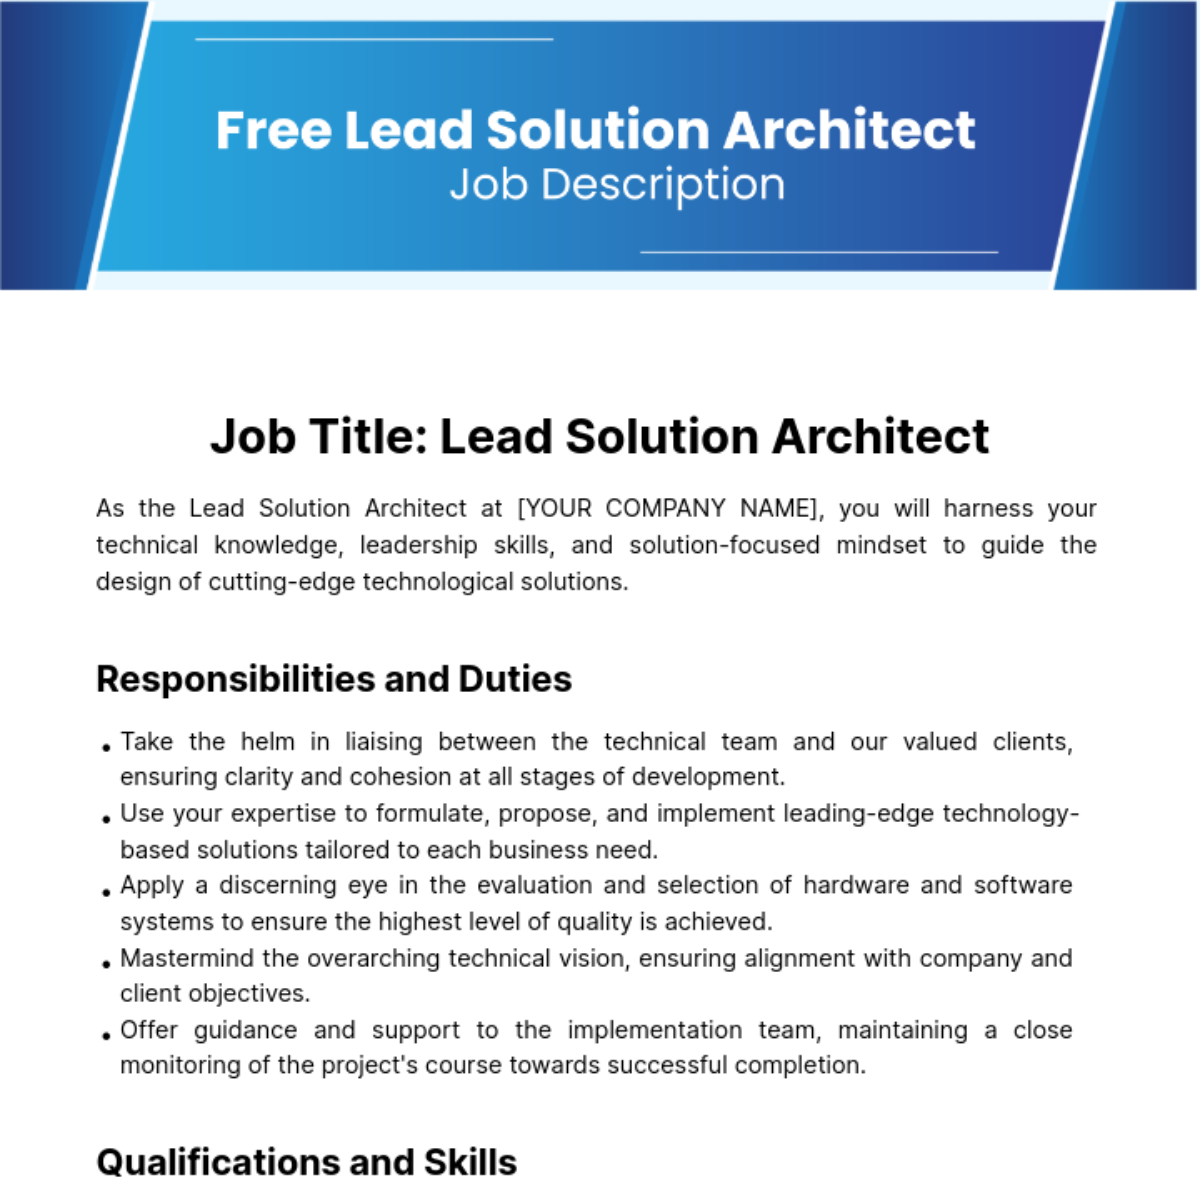 Free Lead Solution Architect Job Description Template